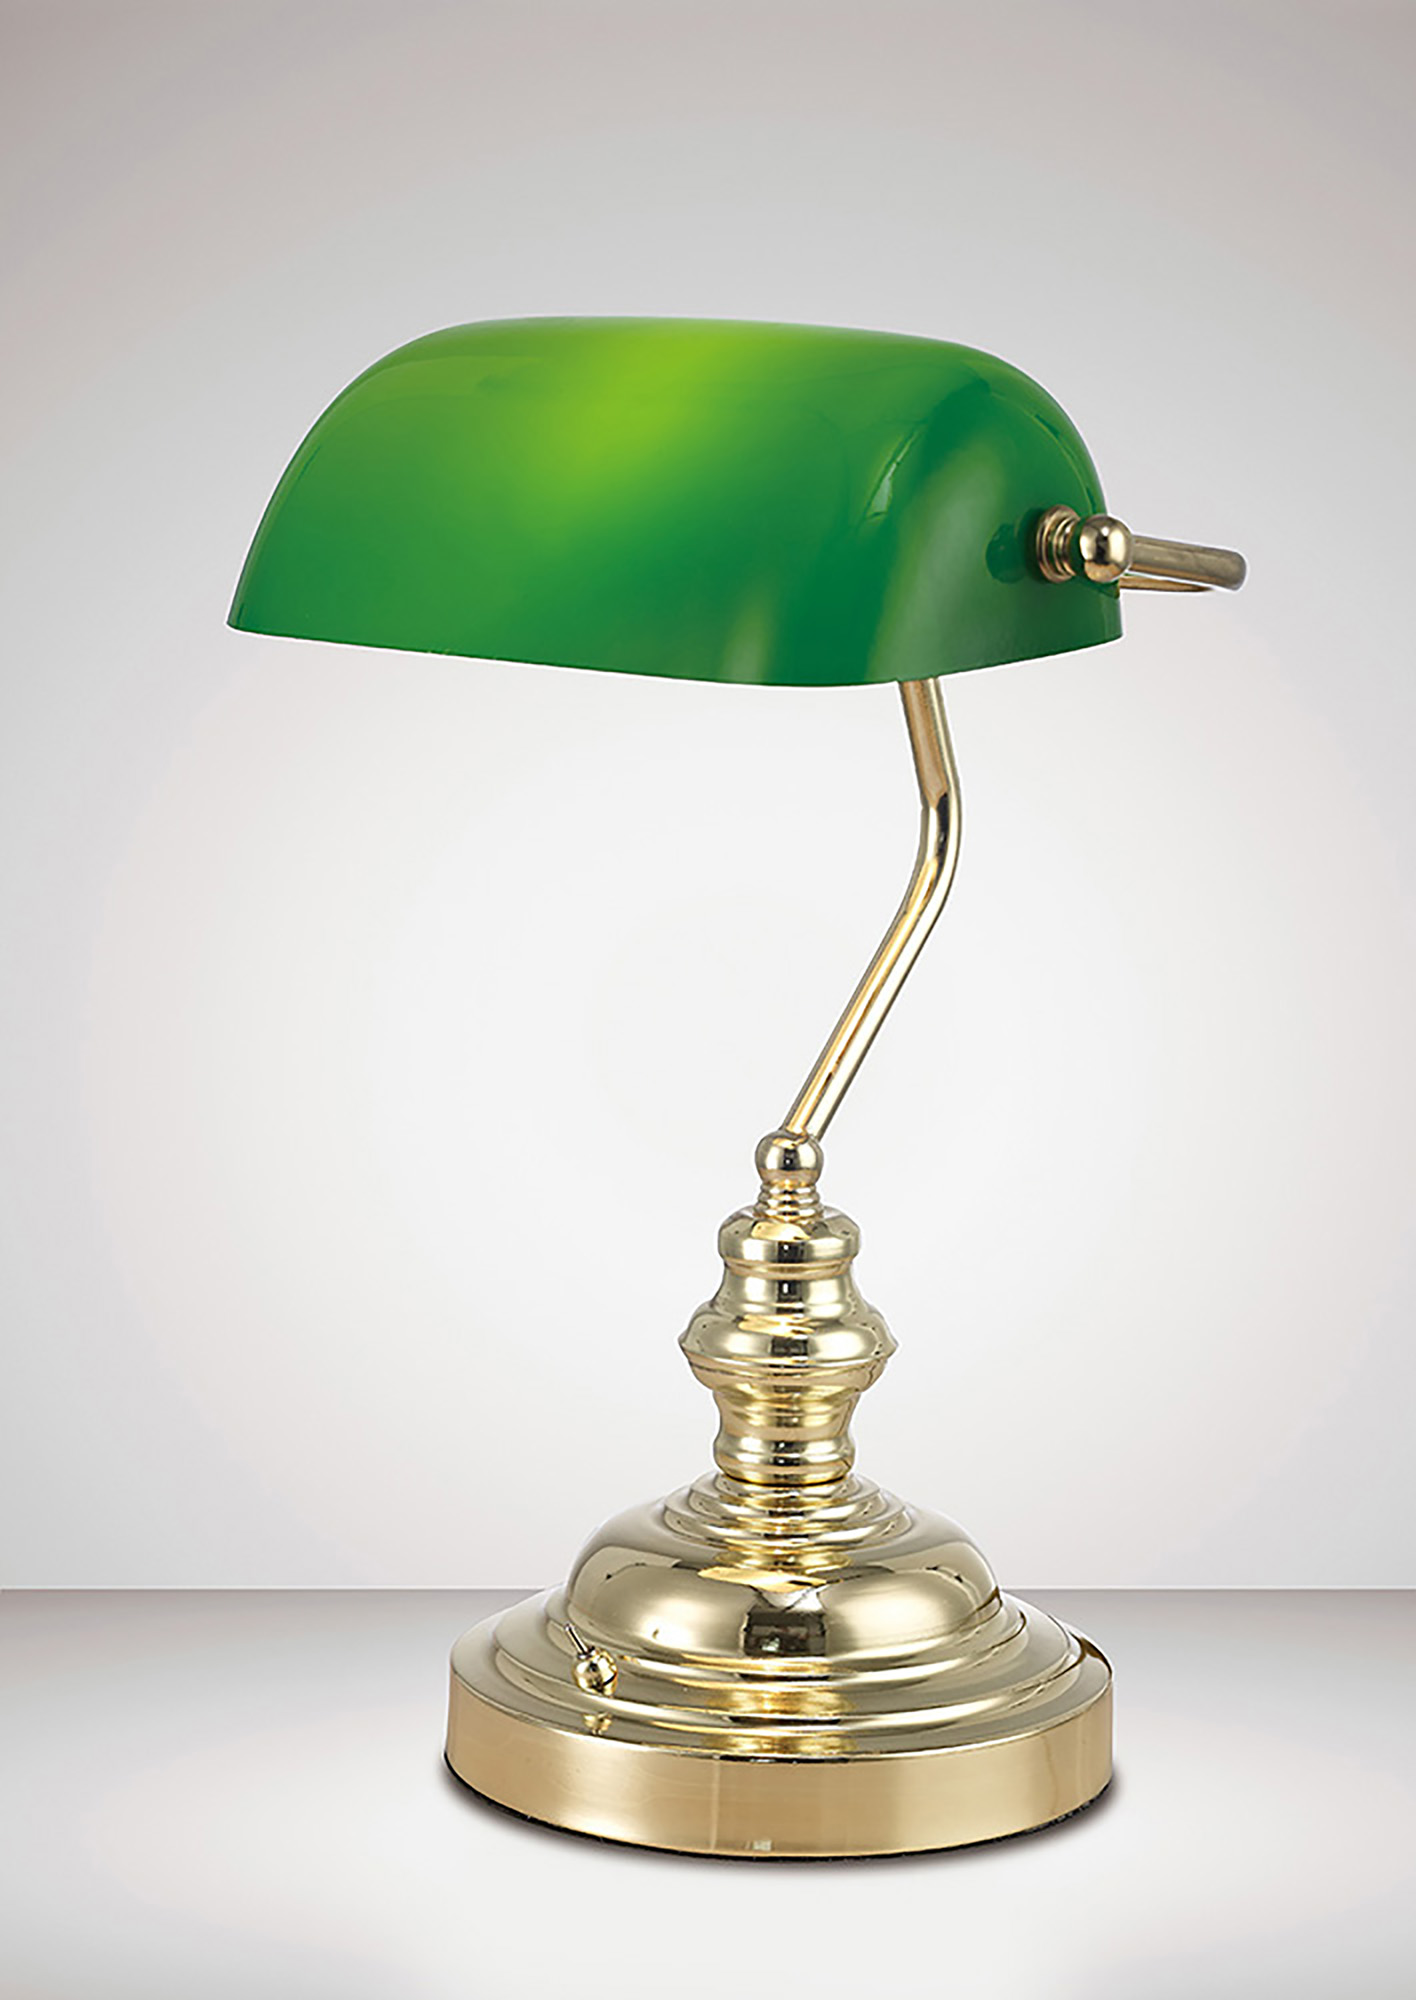 Morgan Table Lamps Deco Desk & Task Lamps